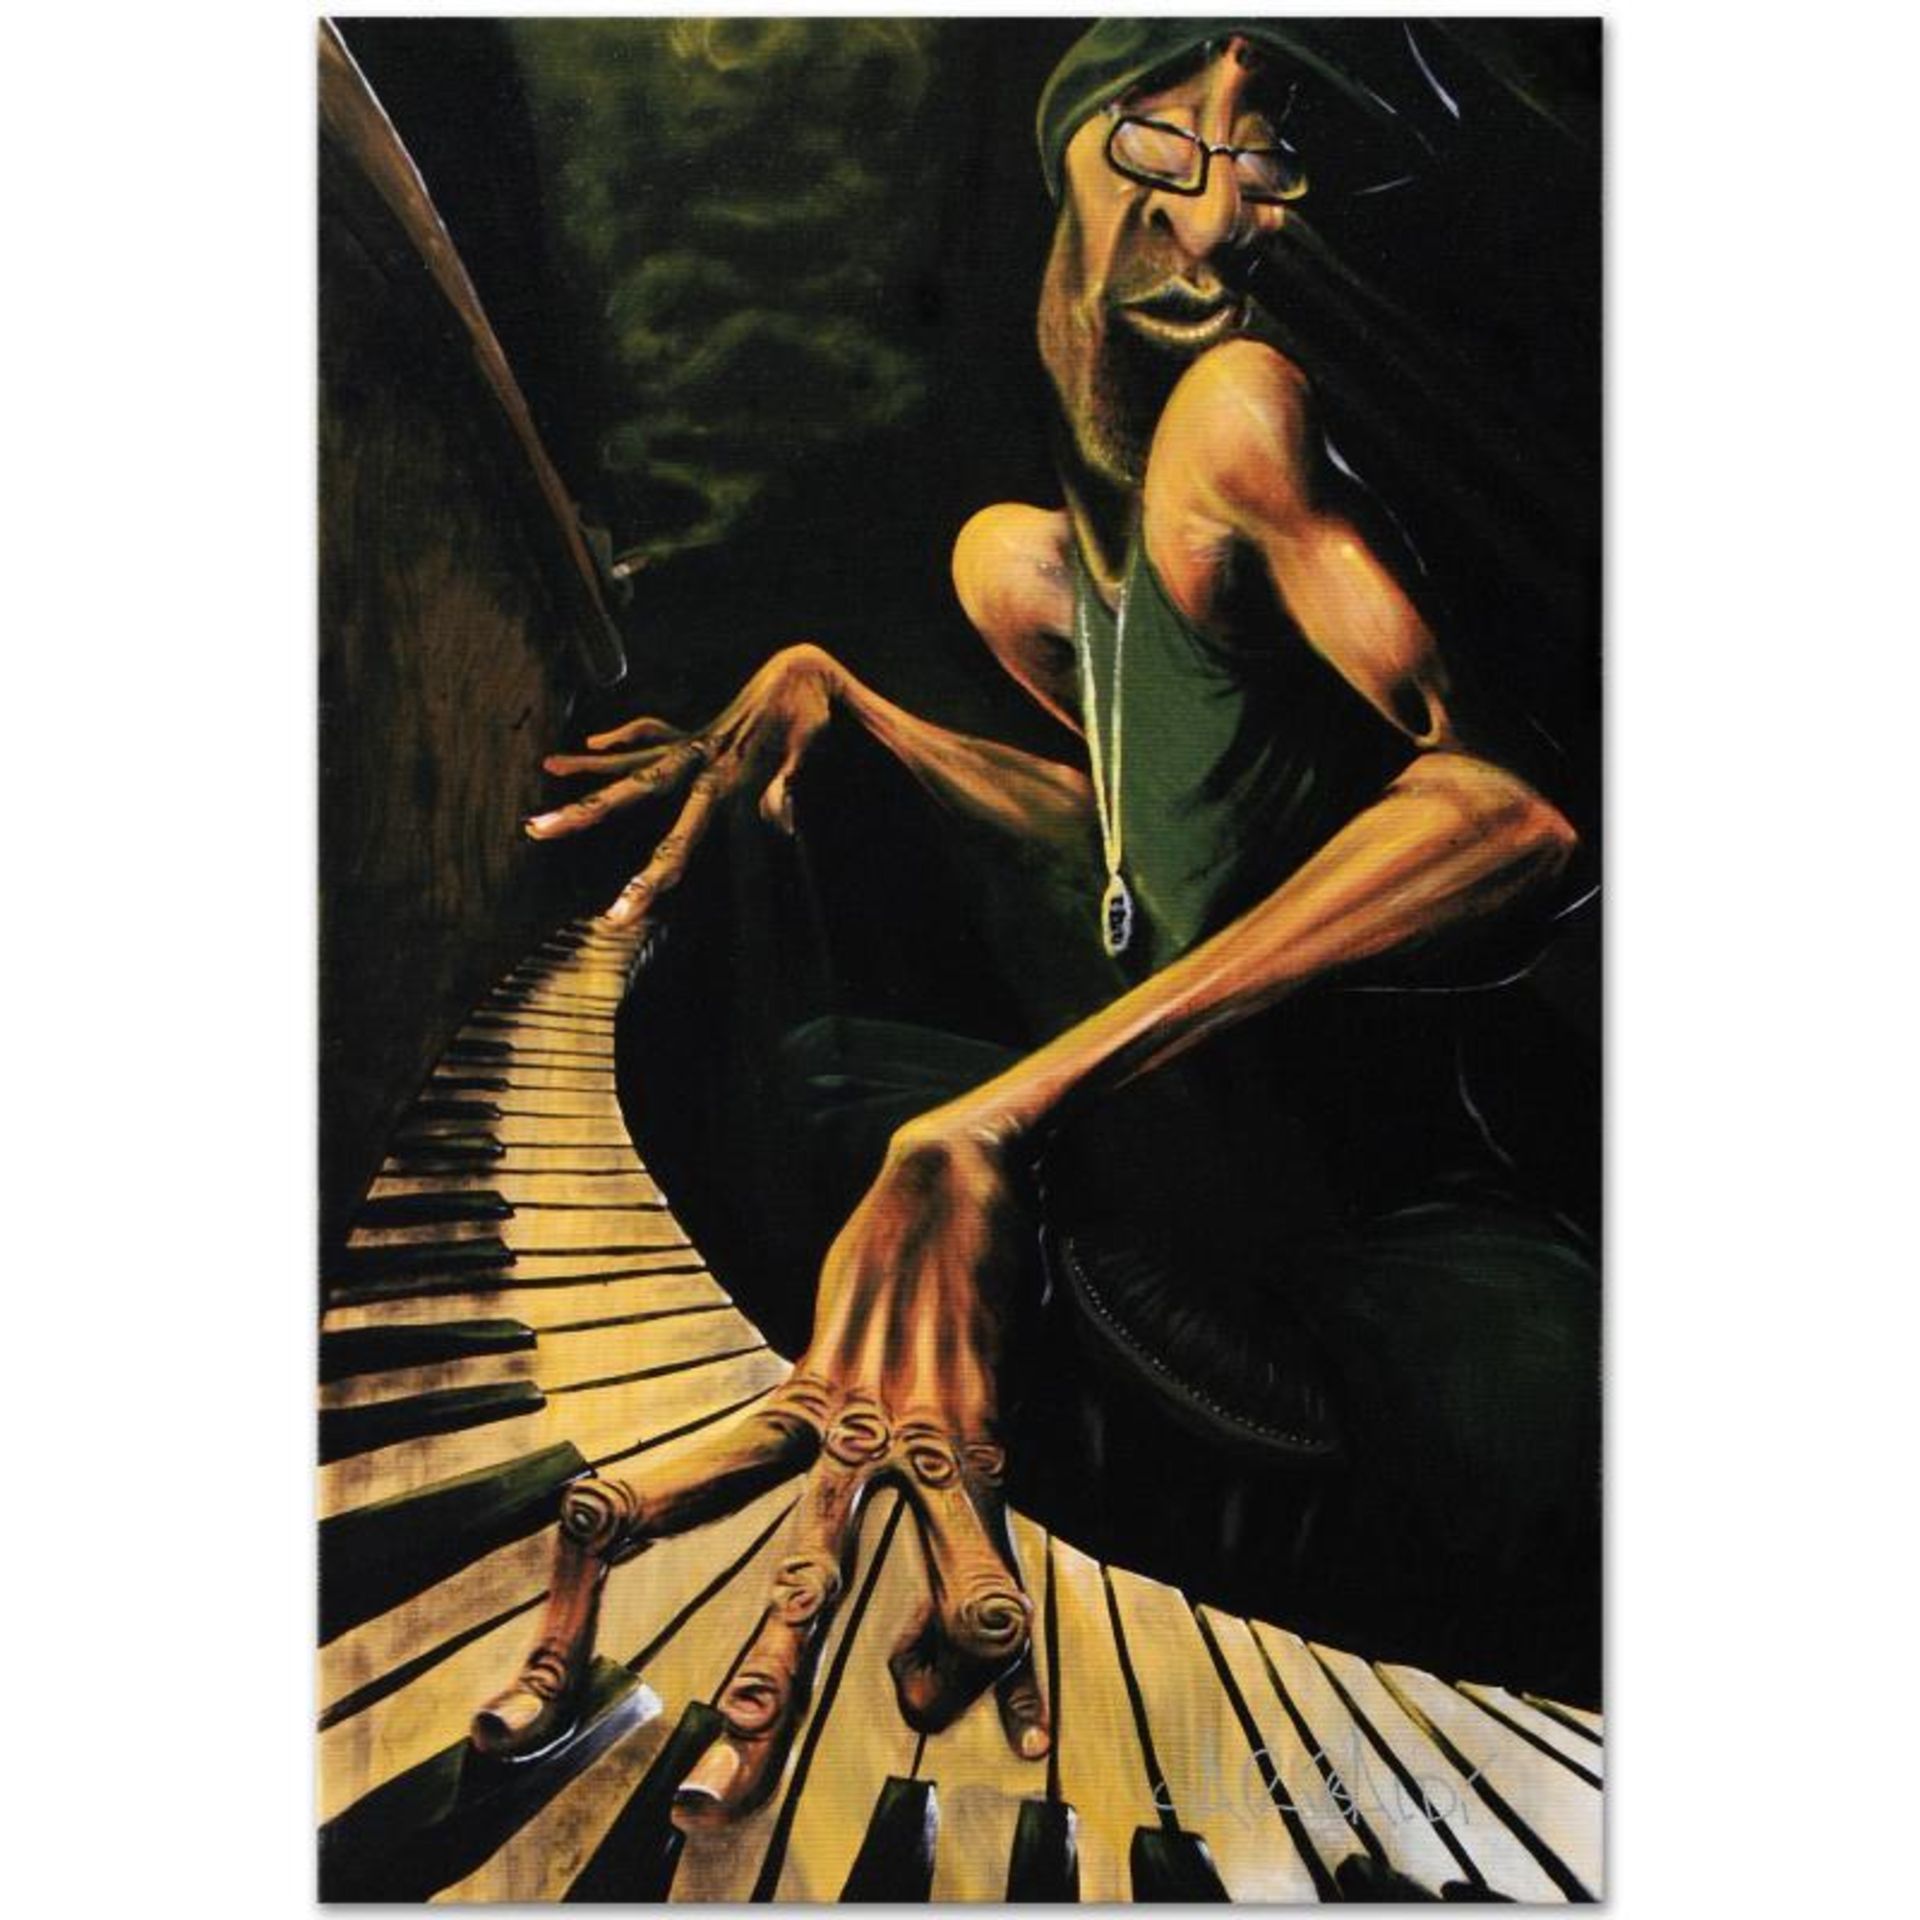 "Lounge Smoke" Limited Edition Giclee on Canvas (24" x 36") by David Garibaldi,